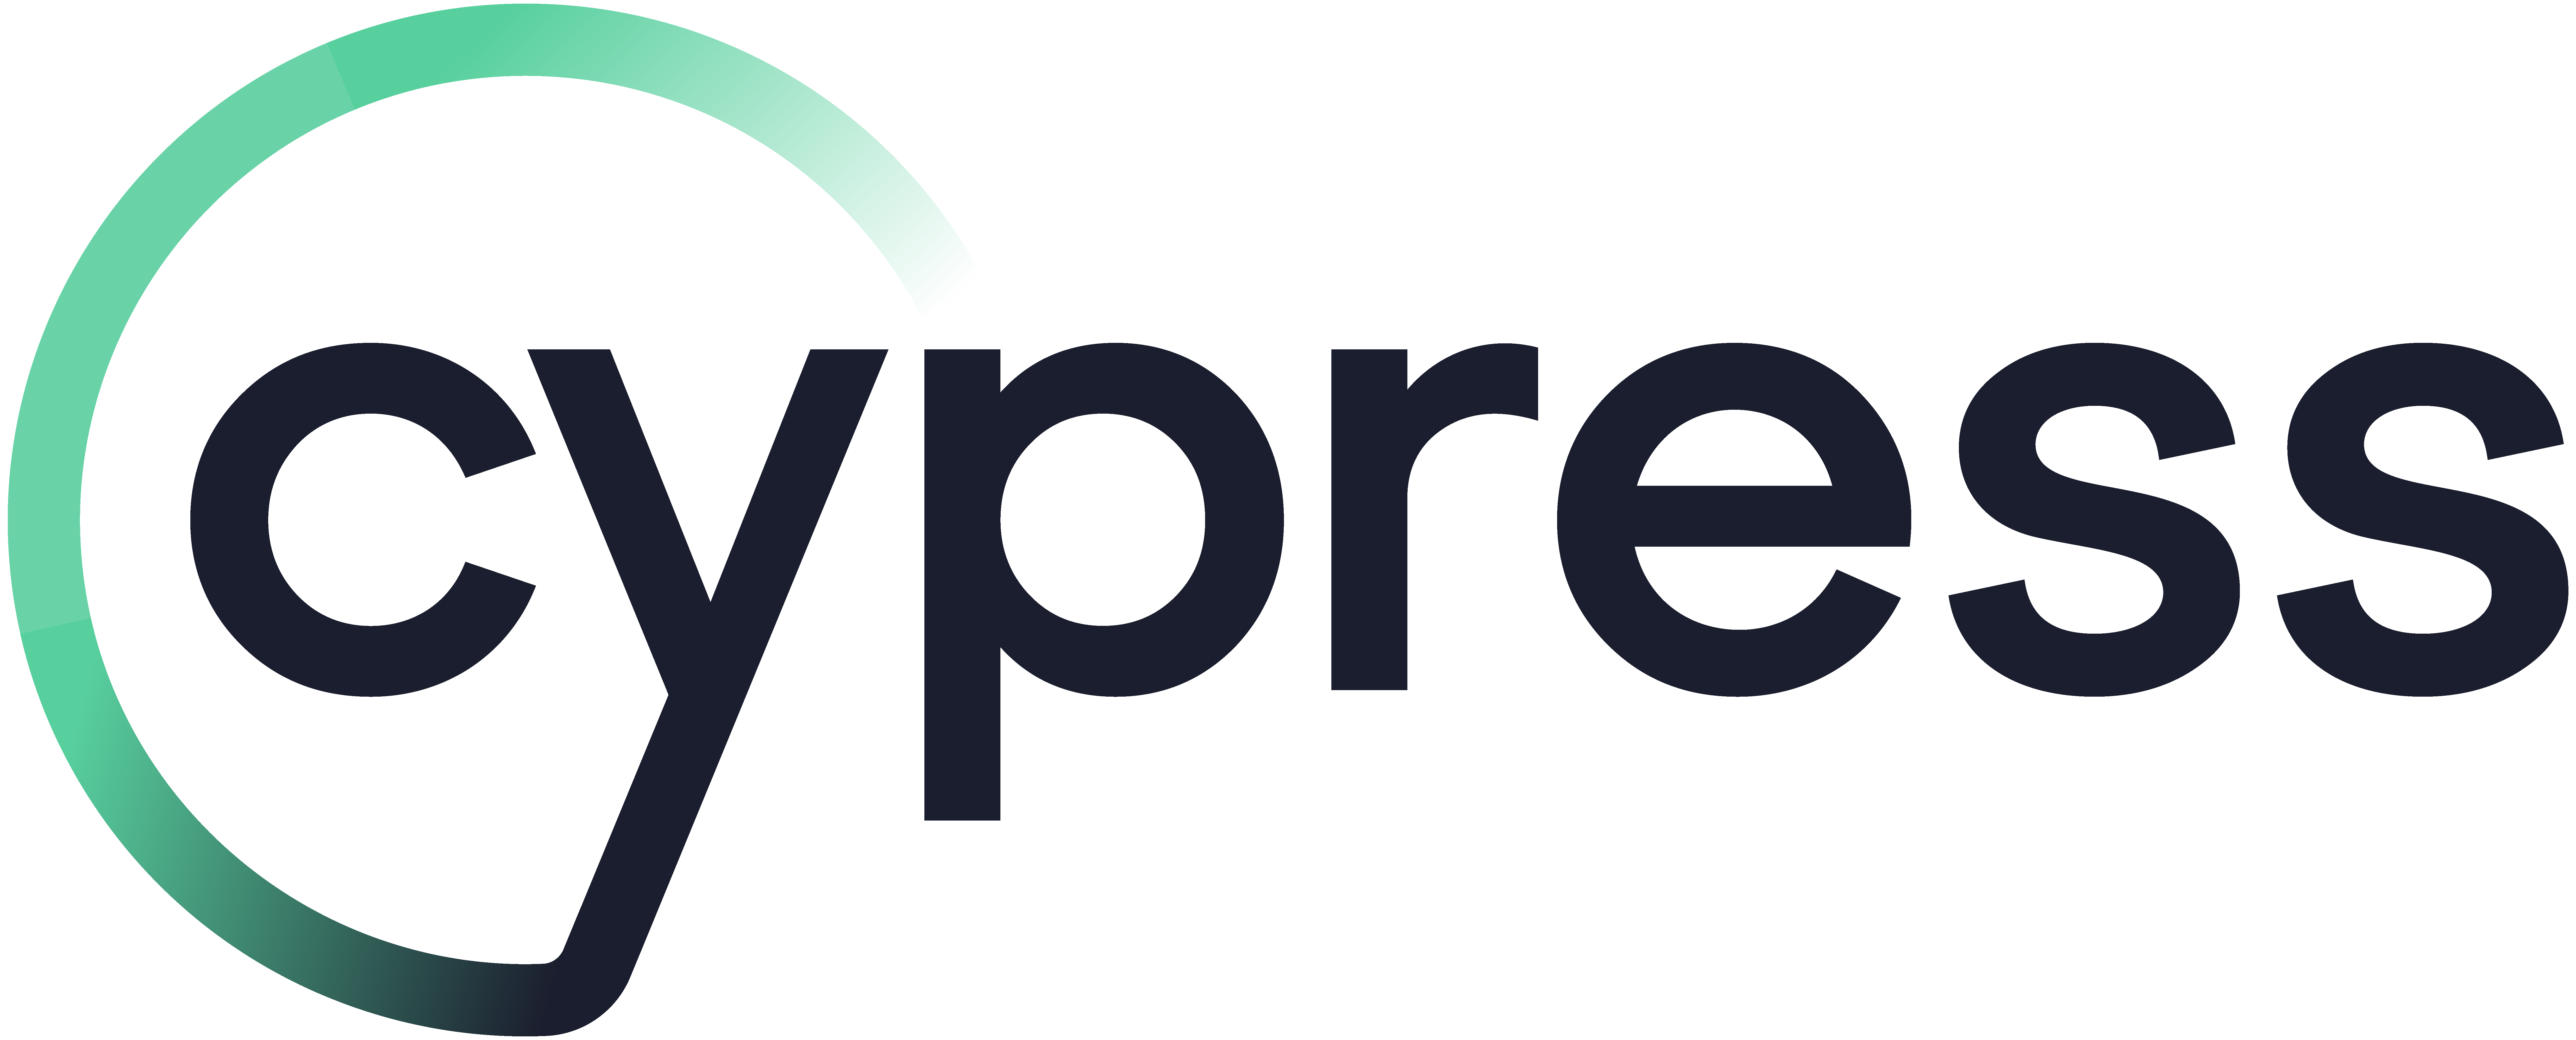 Cypress_Logotype_Dark-Color